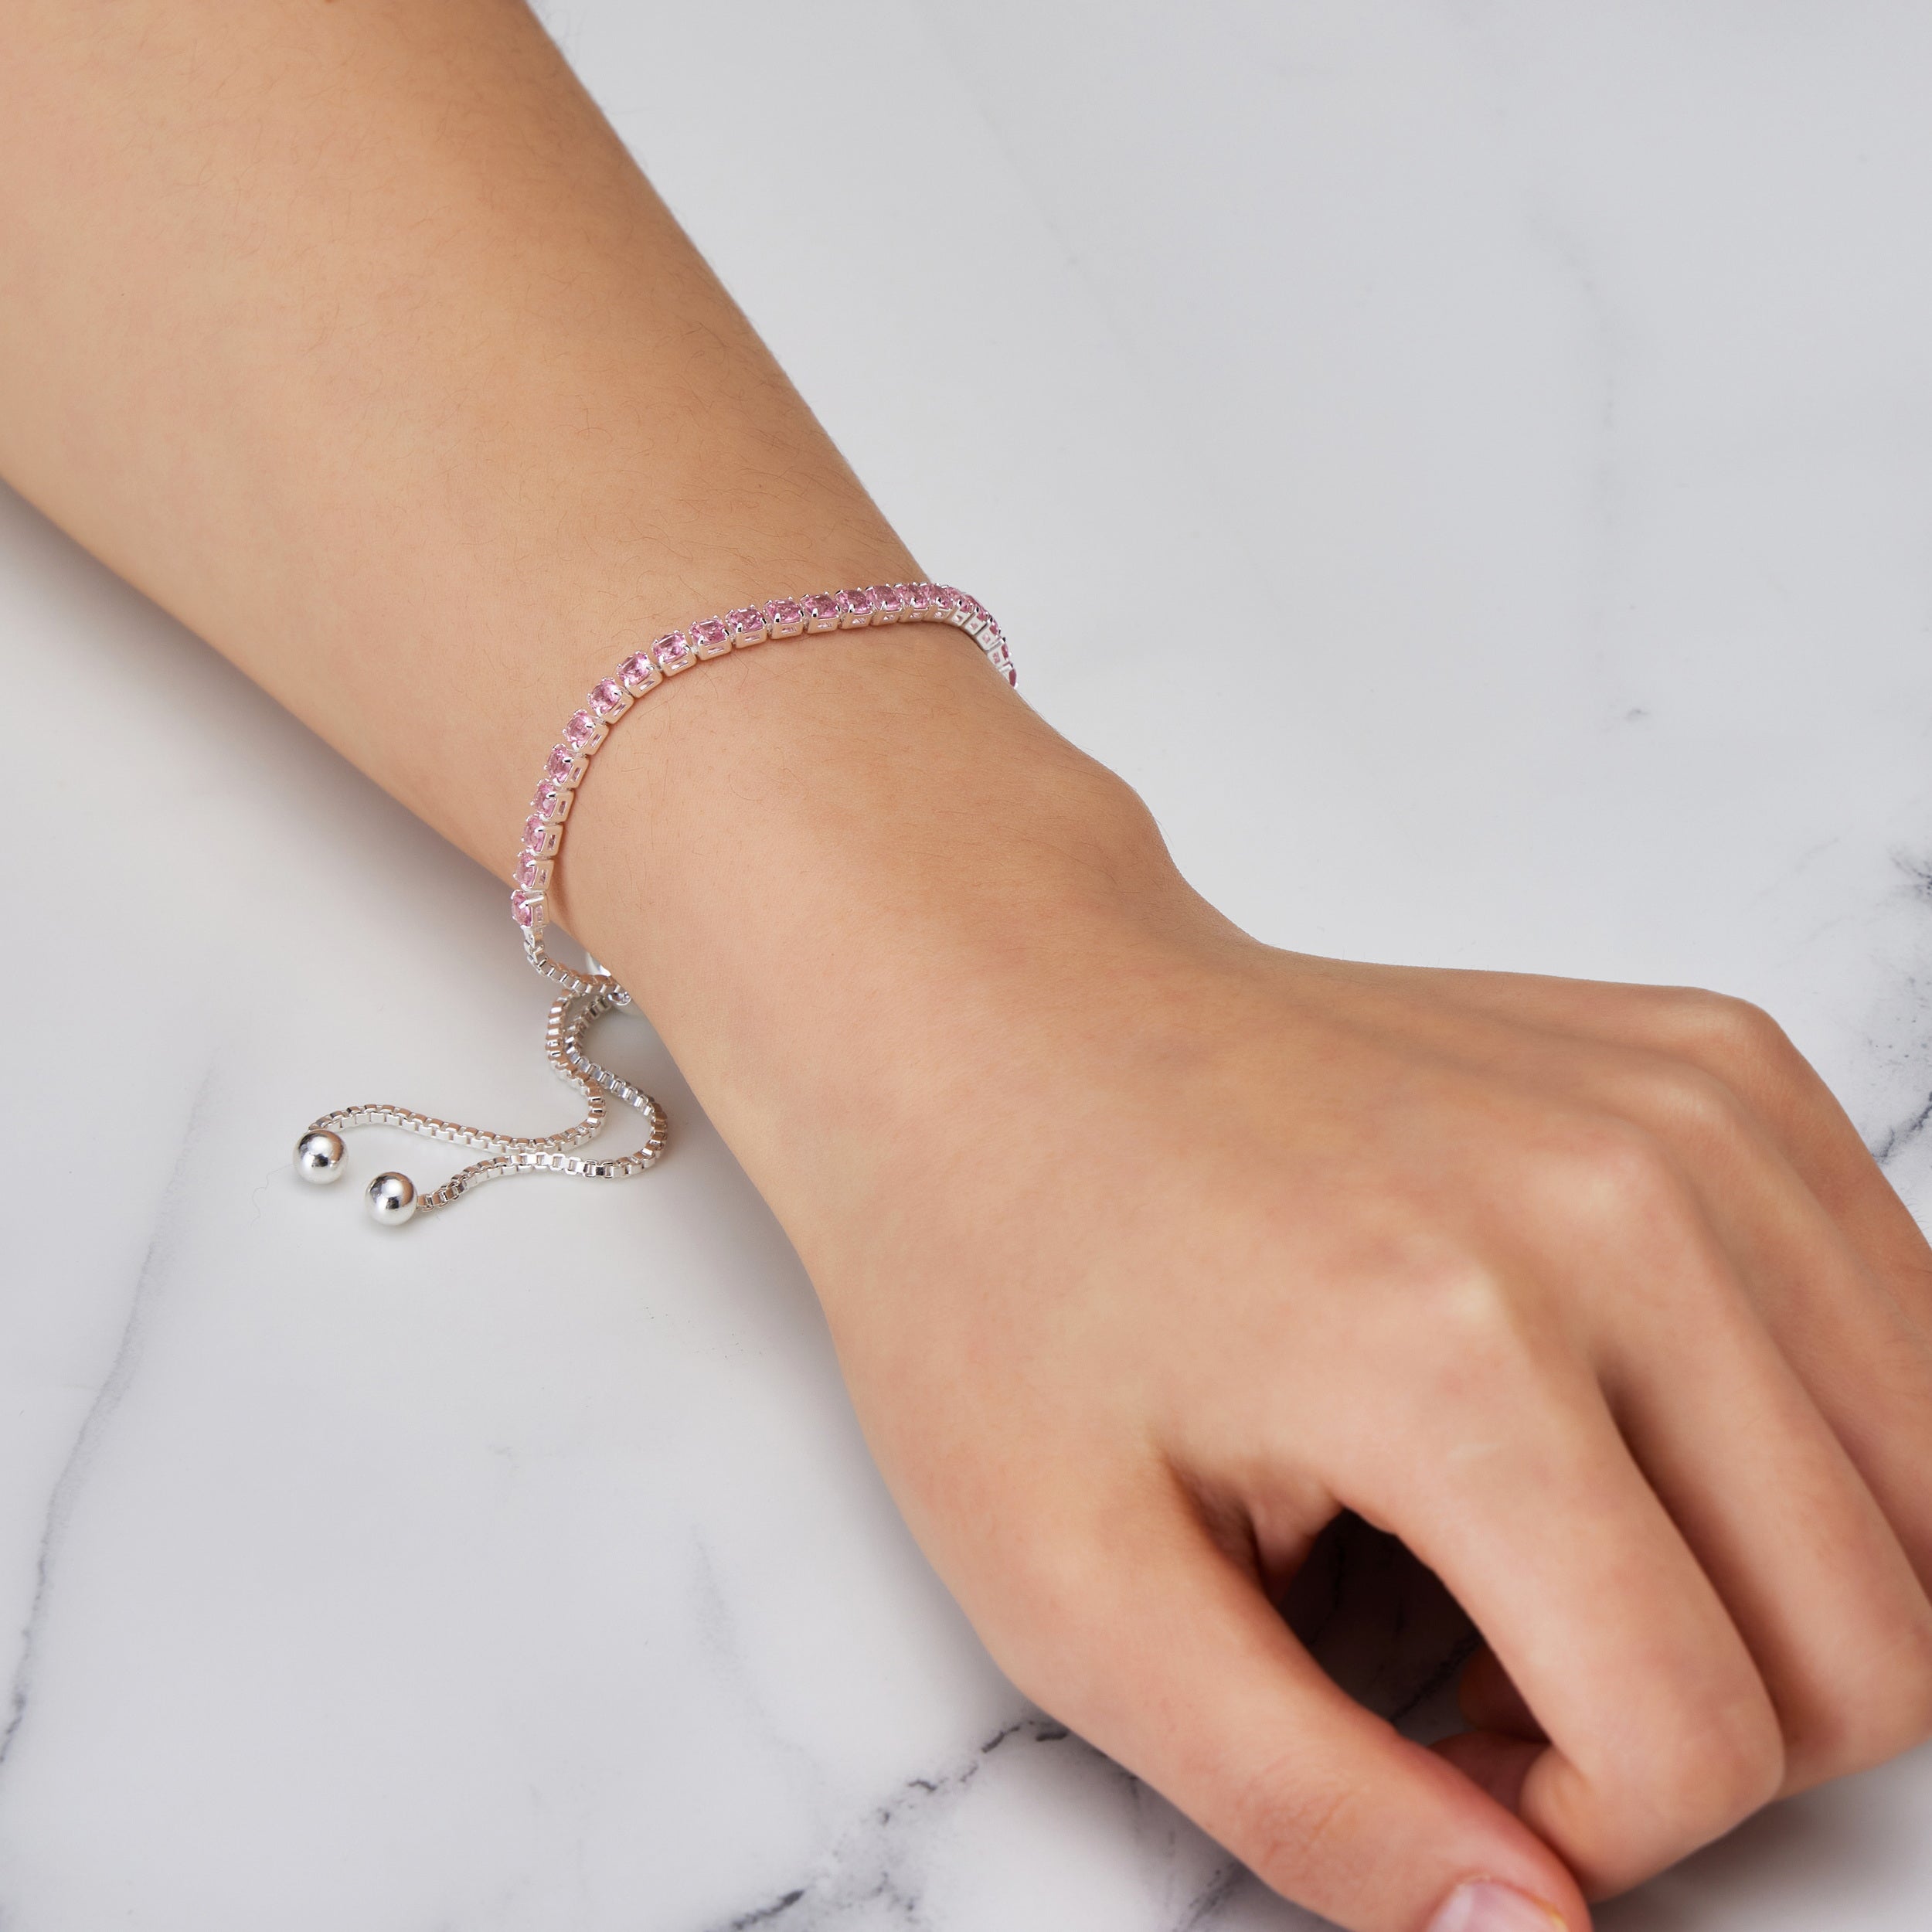 Light Pink Tennis Friendship Bracelet Created with Zircondia® Crystals